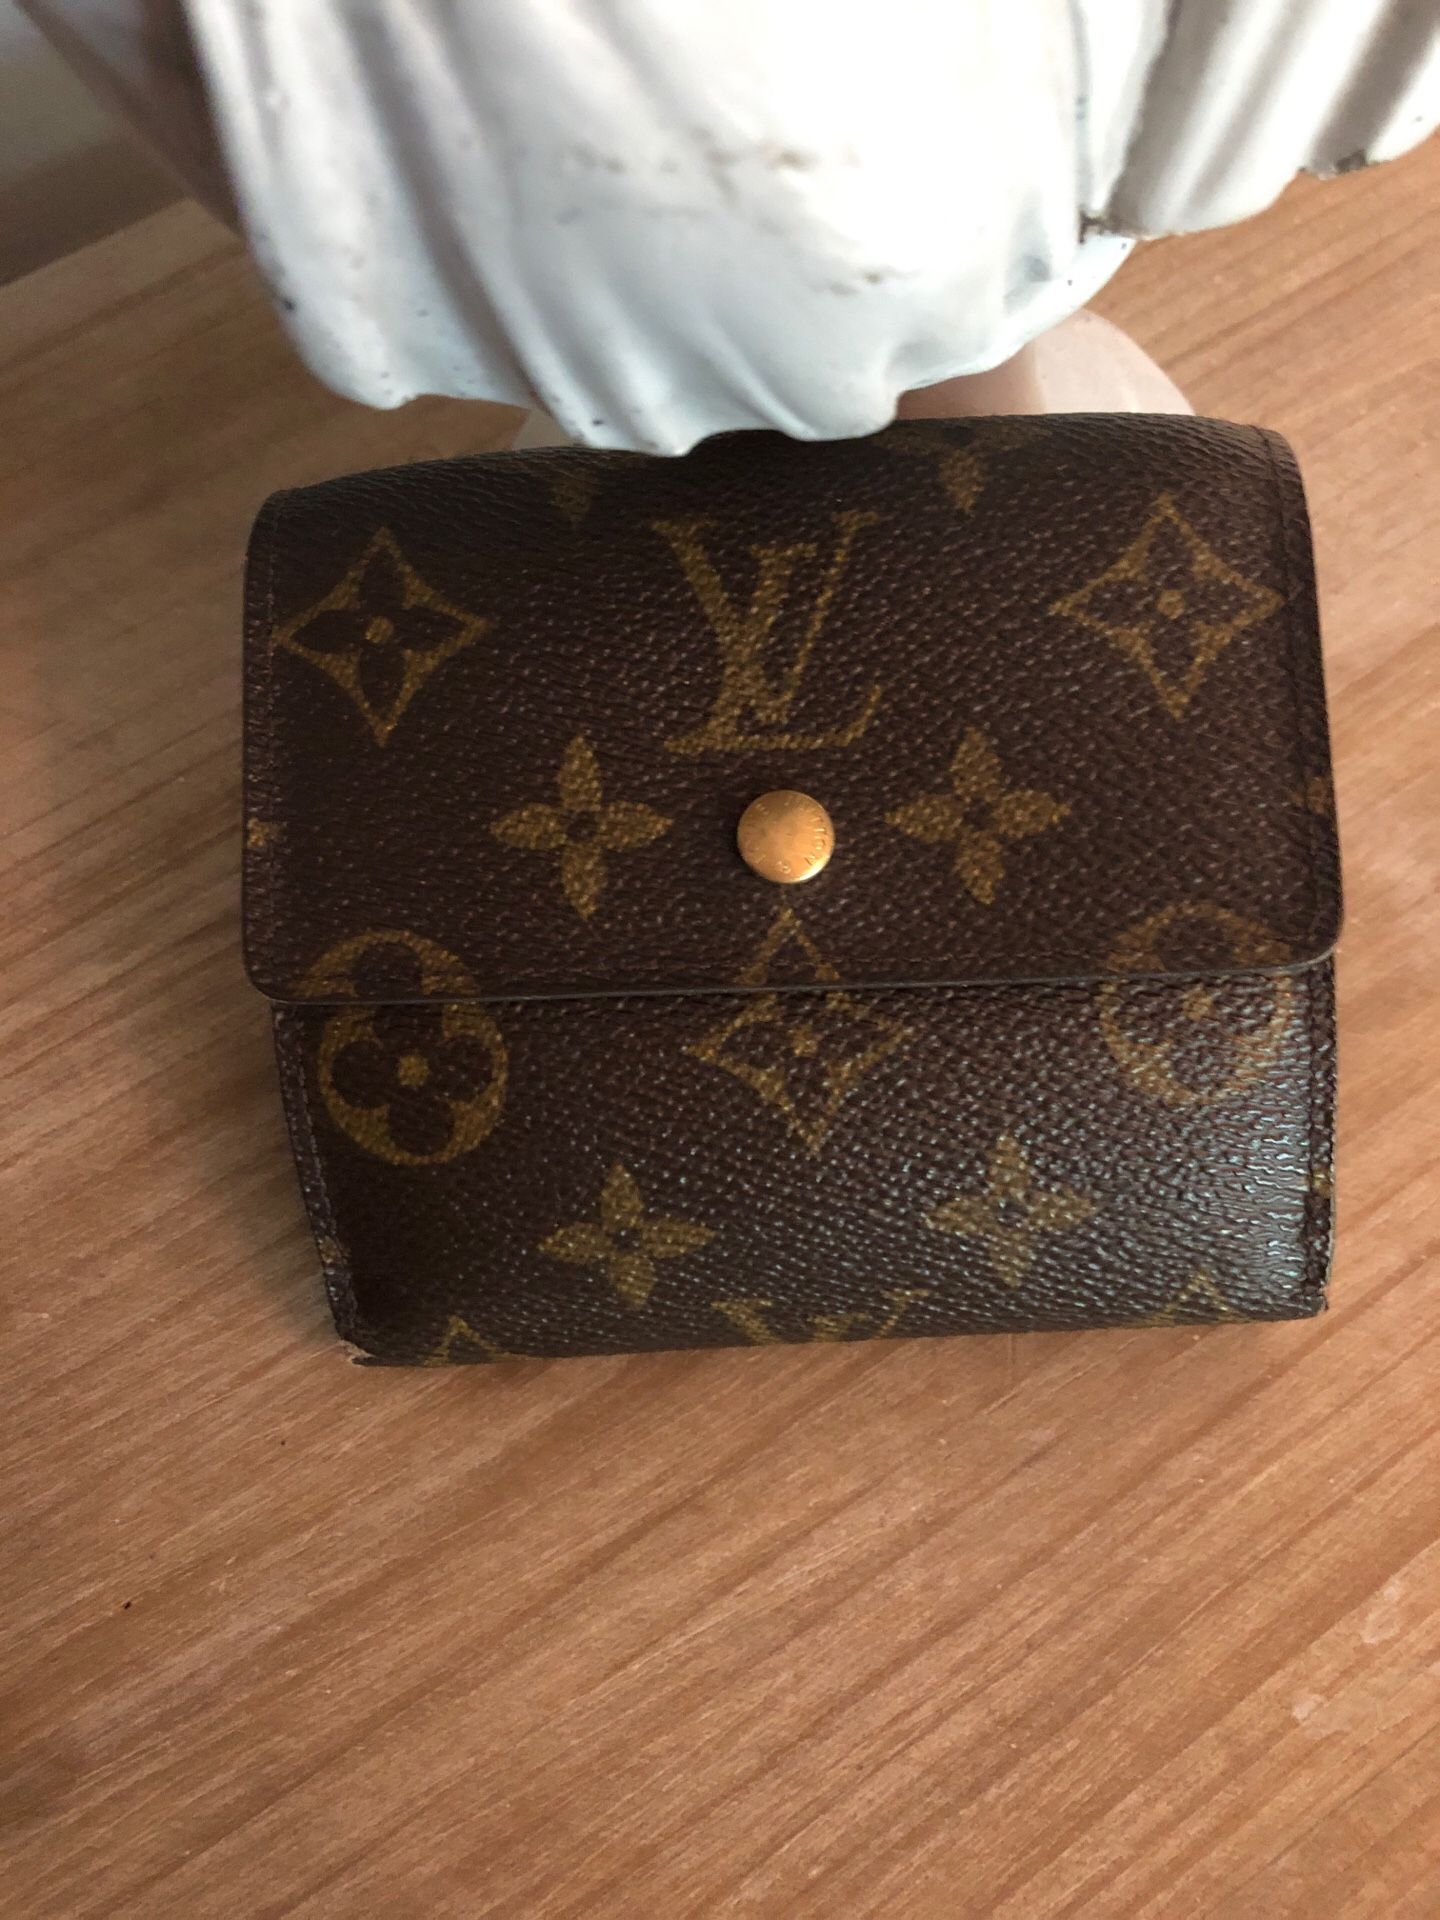 Louis Vuitton compact monogram wallet